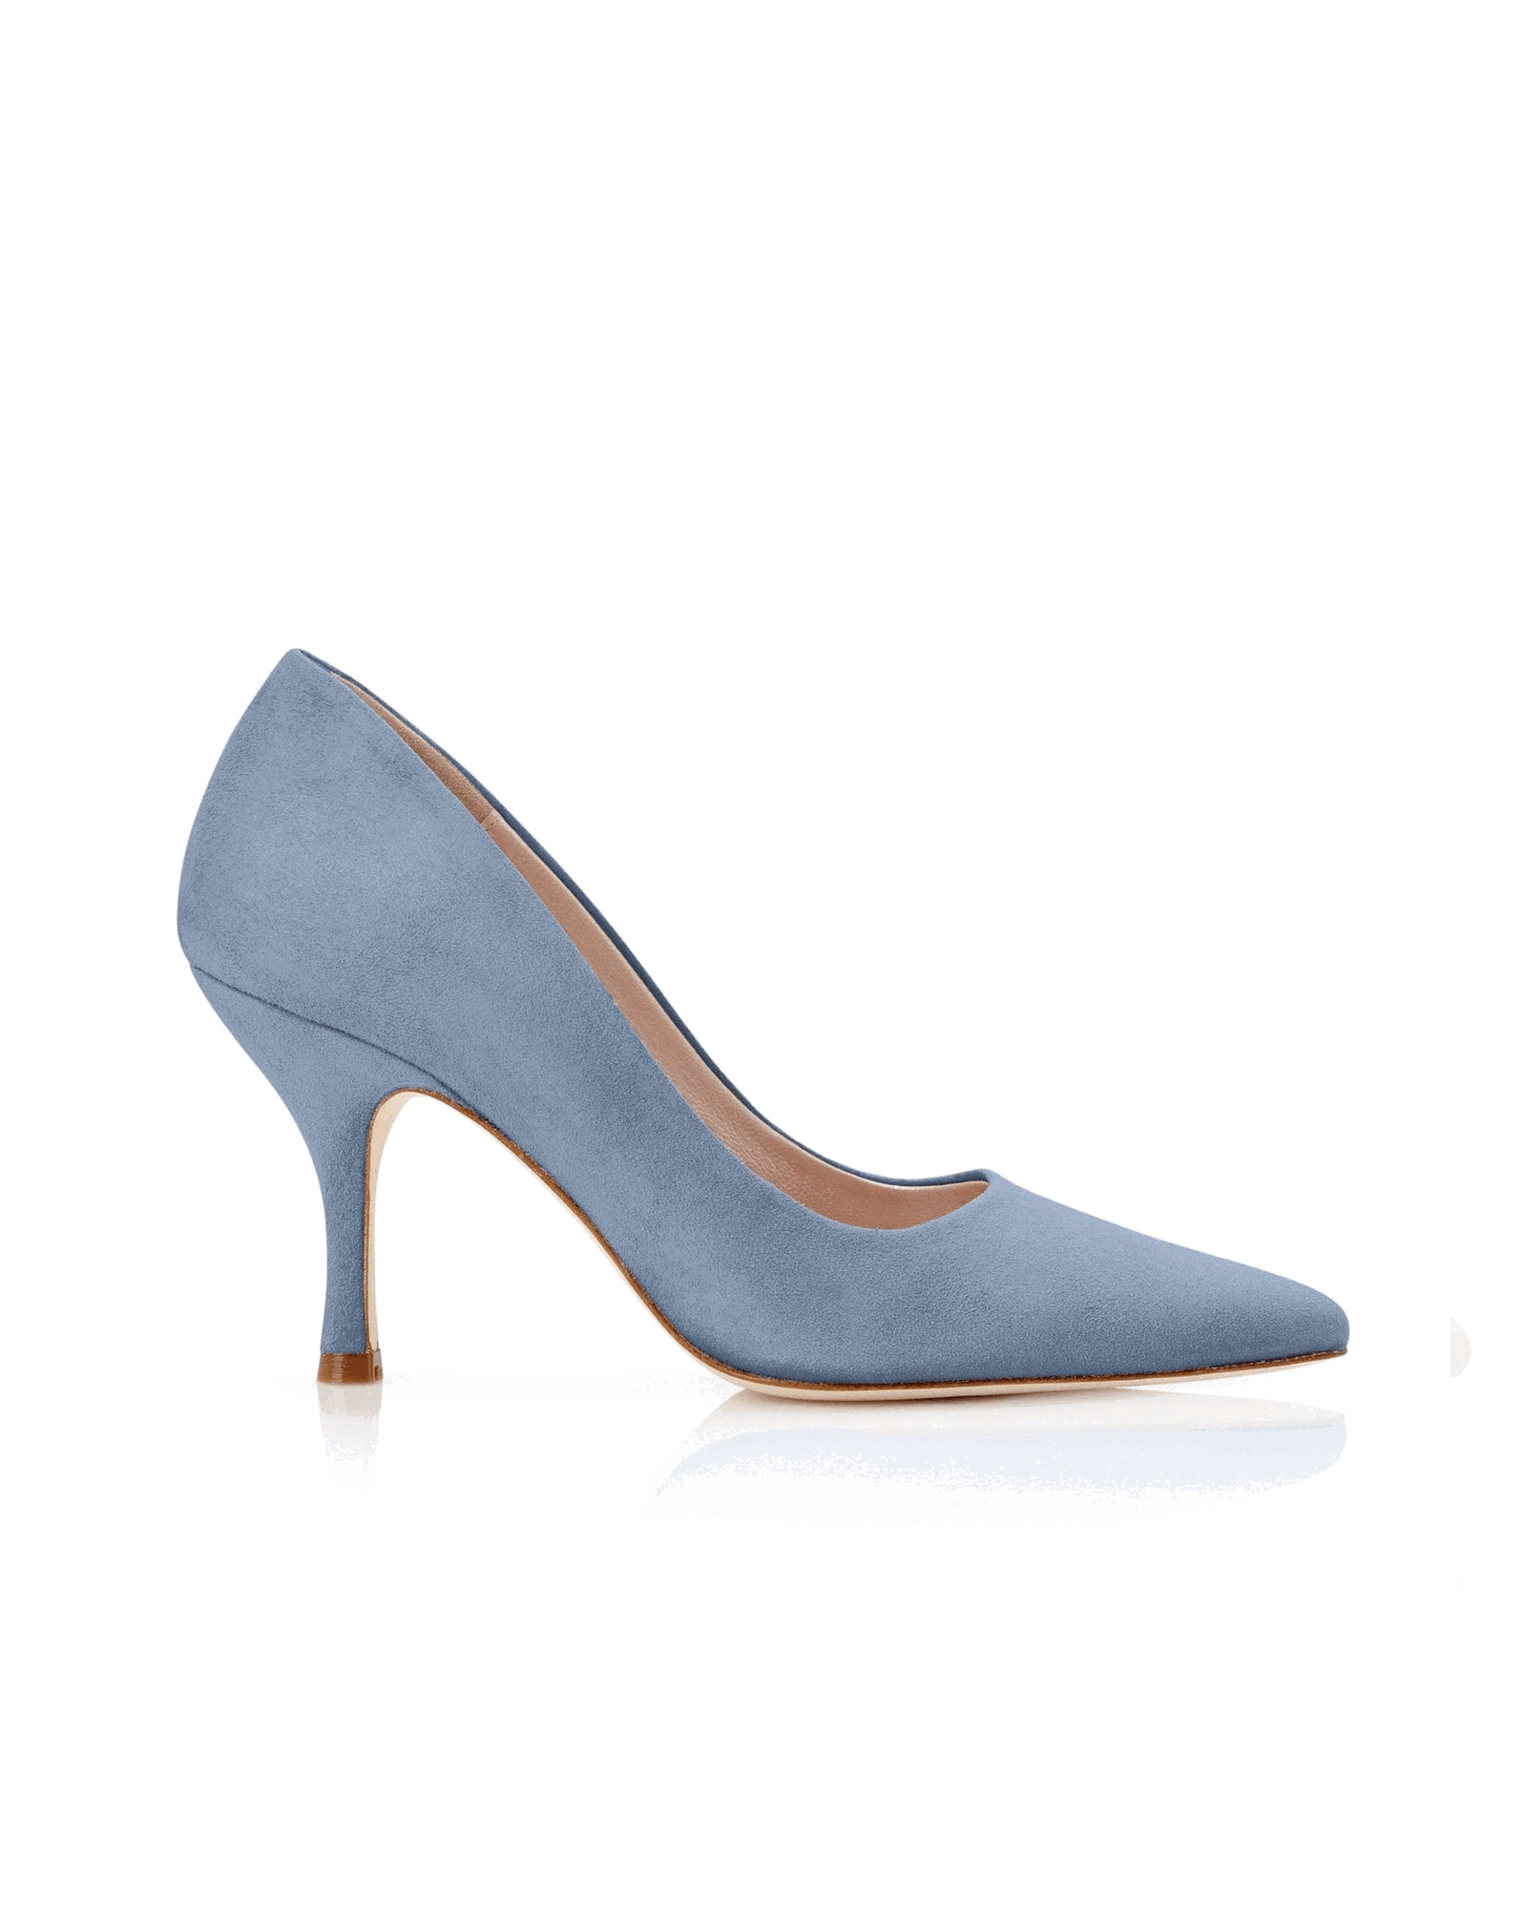 Emmy London Olivia Mid Heel Blue wedding shoes